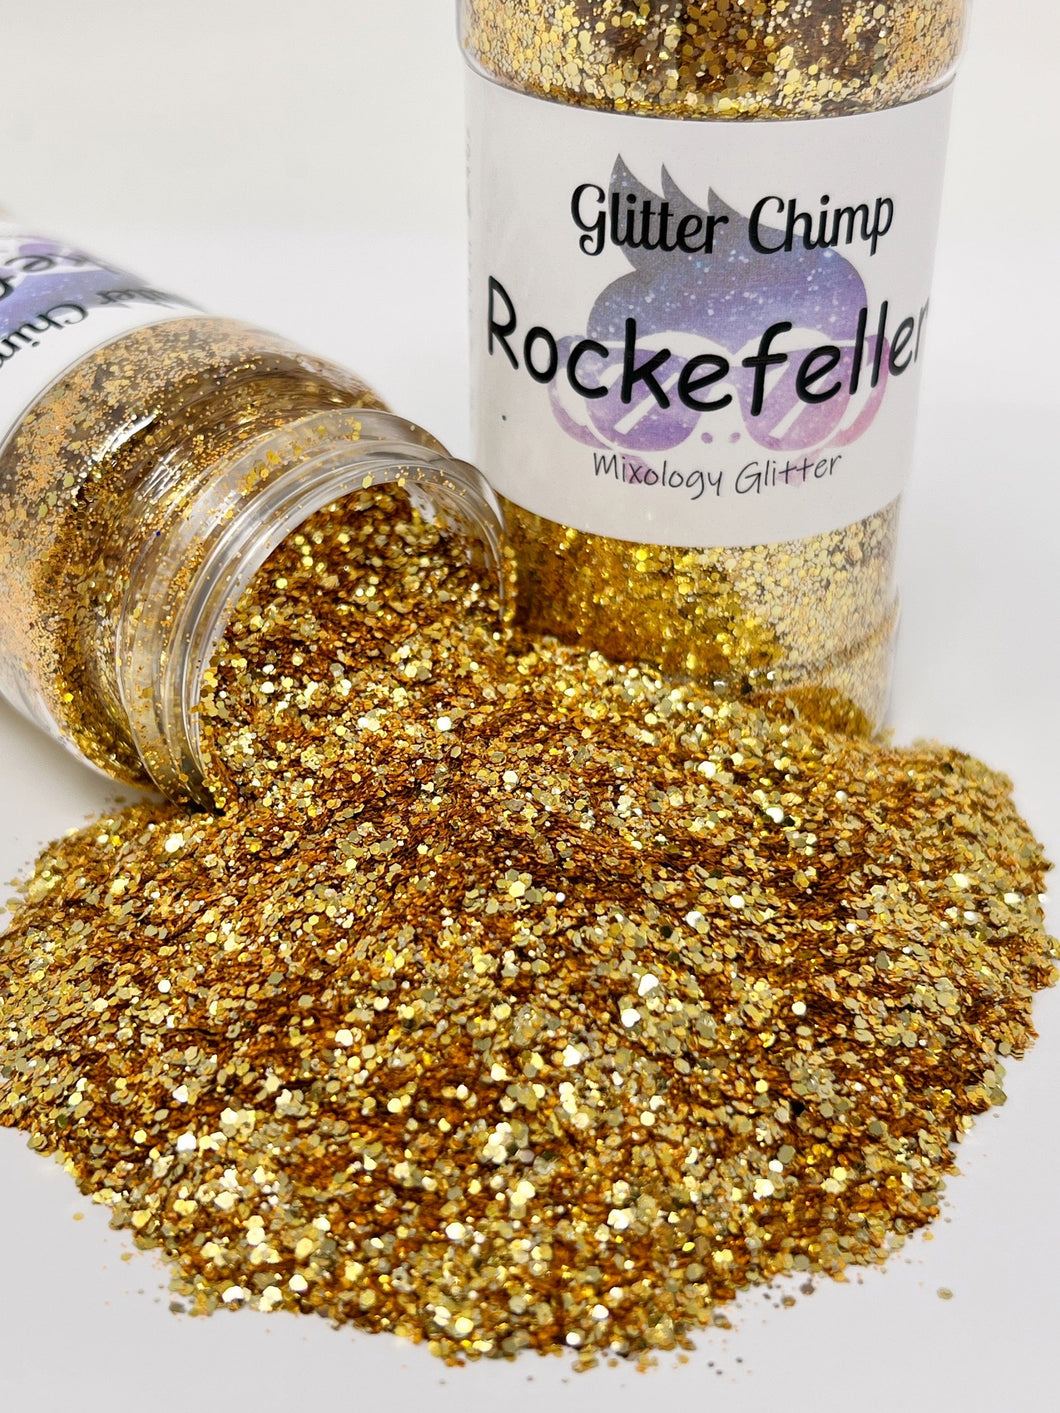 Rockefeller - Mixology Glitter